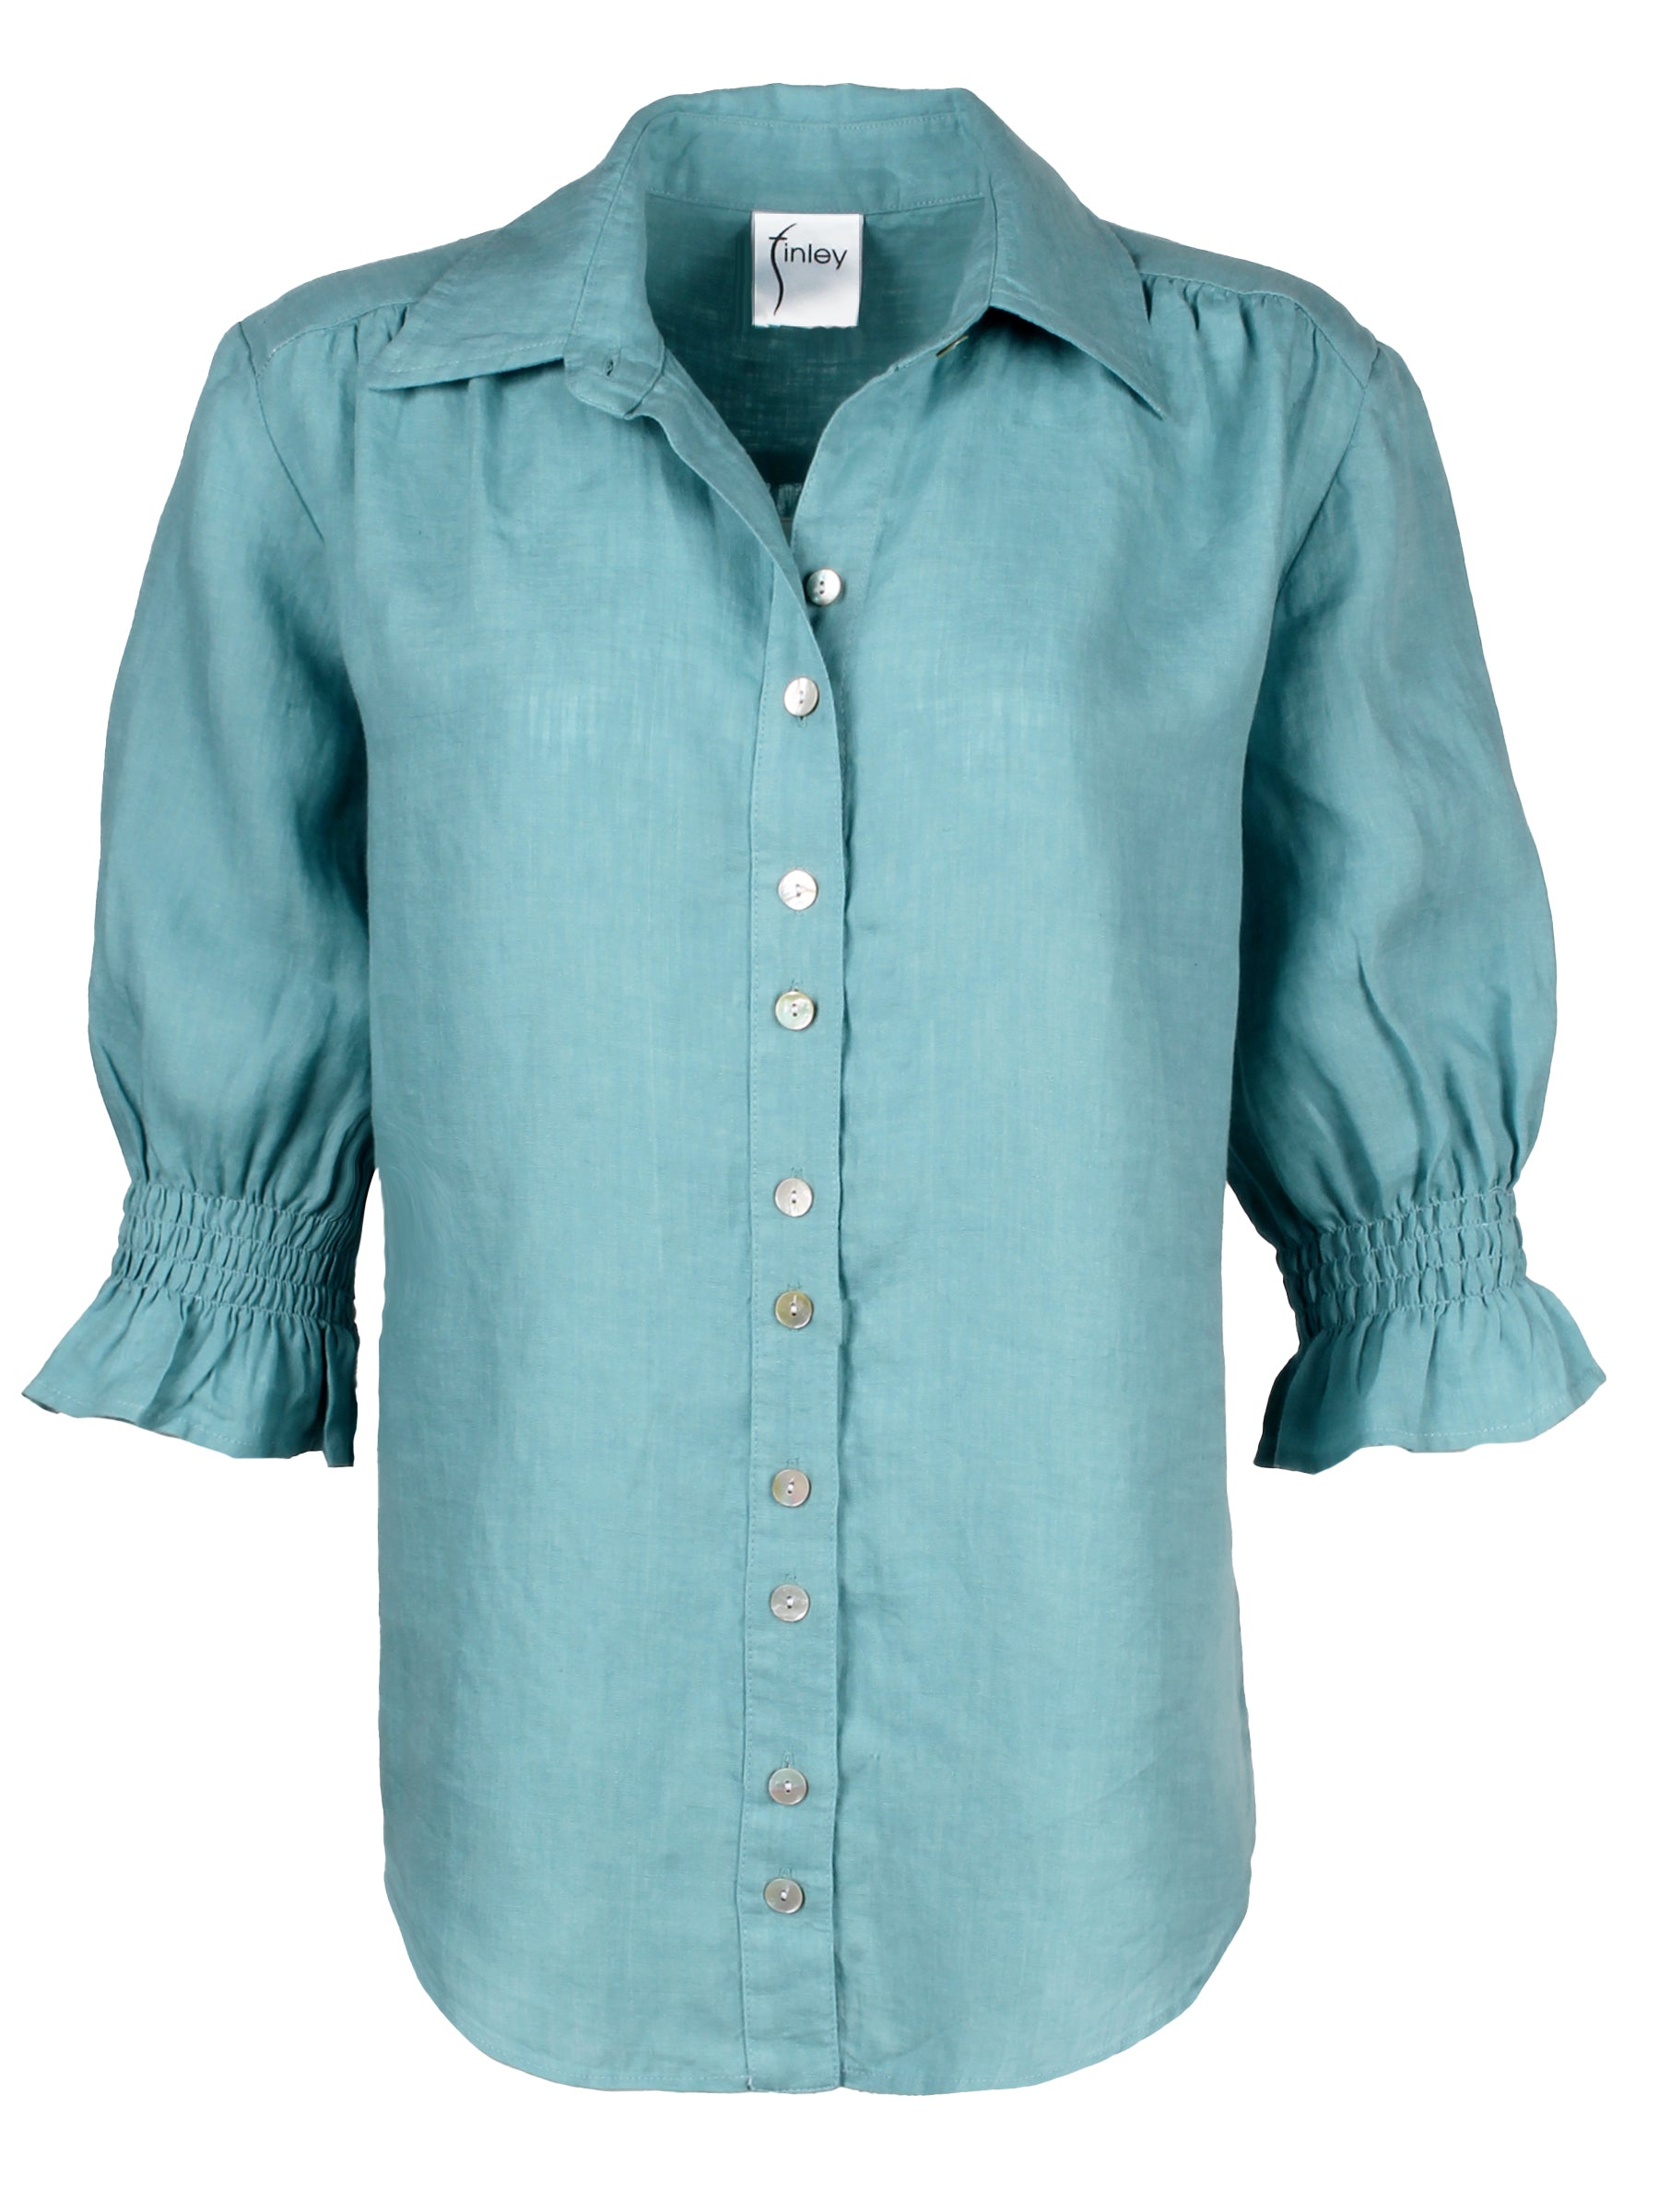 Plus Size Women's Button Down Shirts & Shirt Dresses Online – Finley Shirts